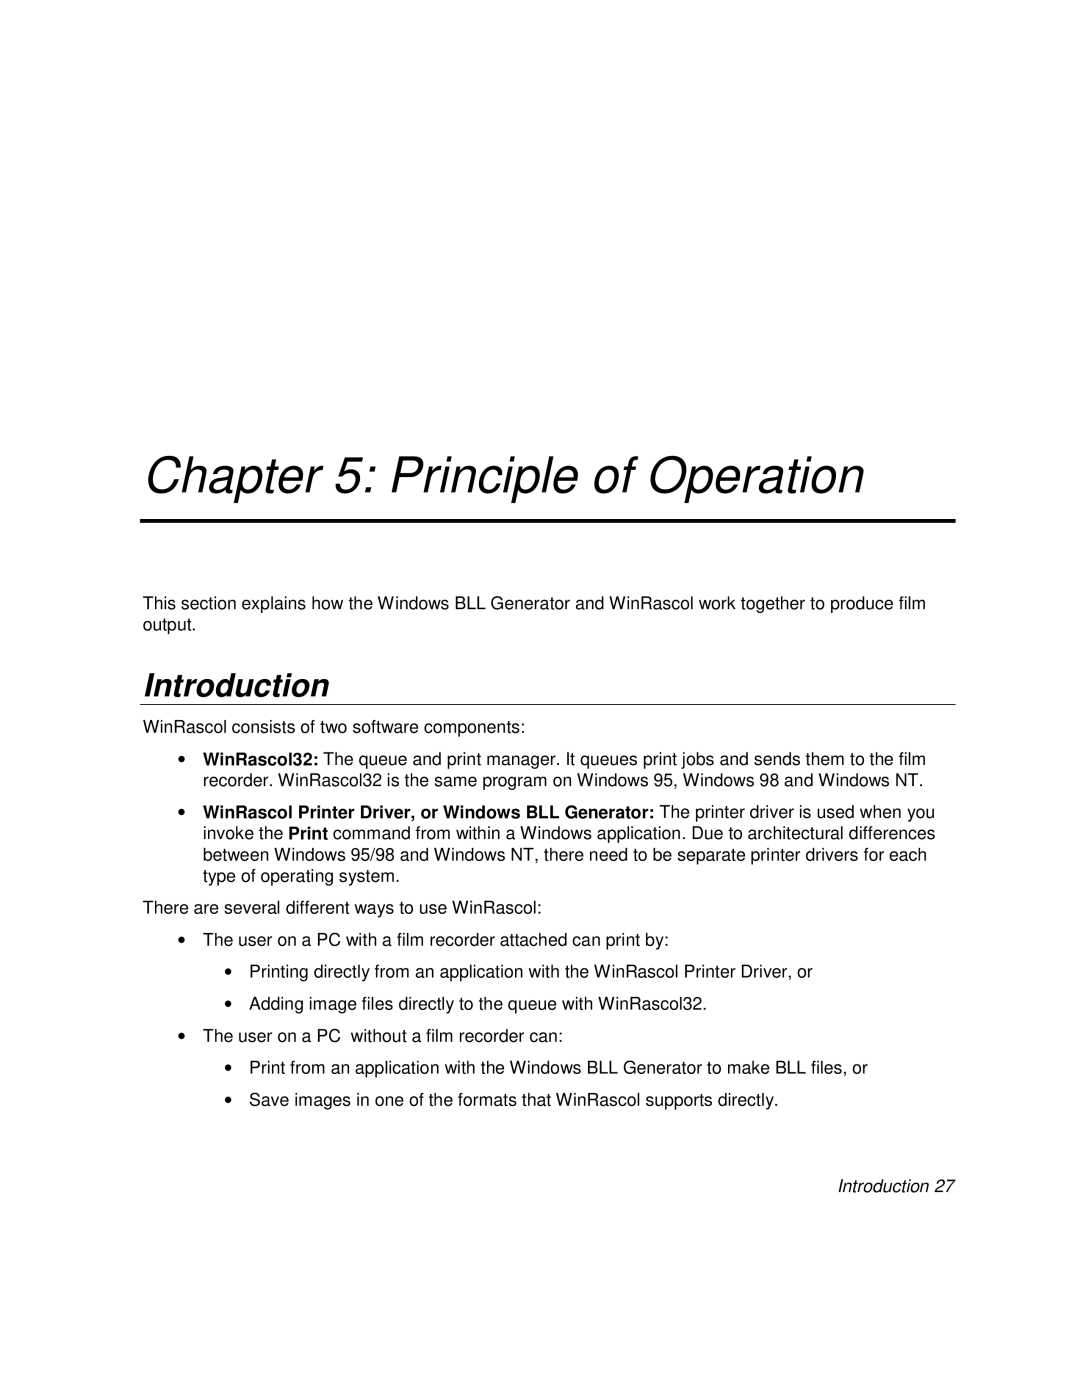 Polaroid BLL Generator manual Principle of Operation, Introduction 